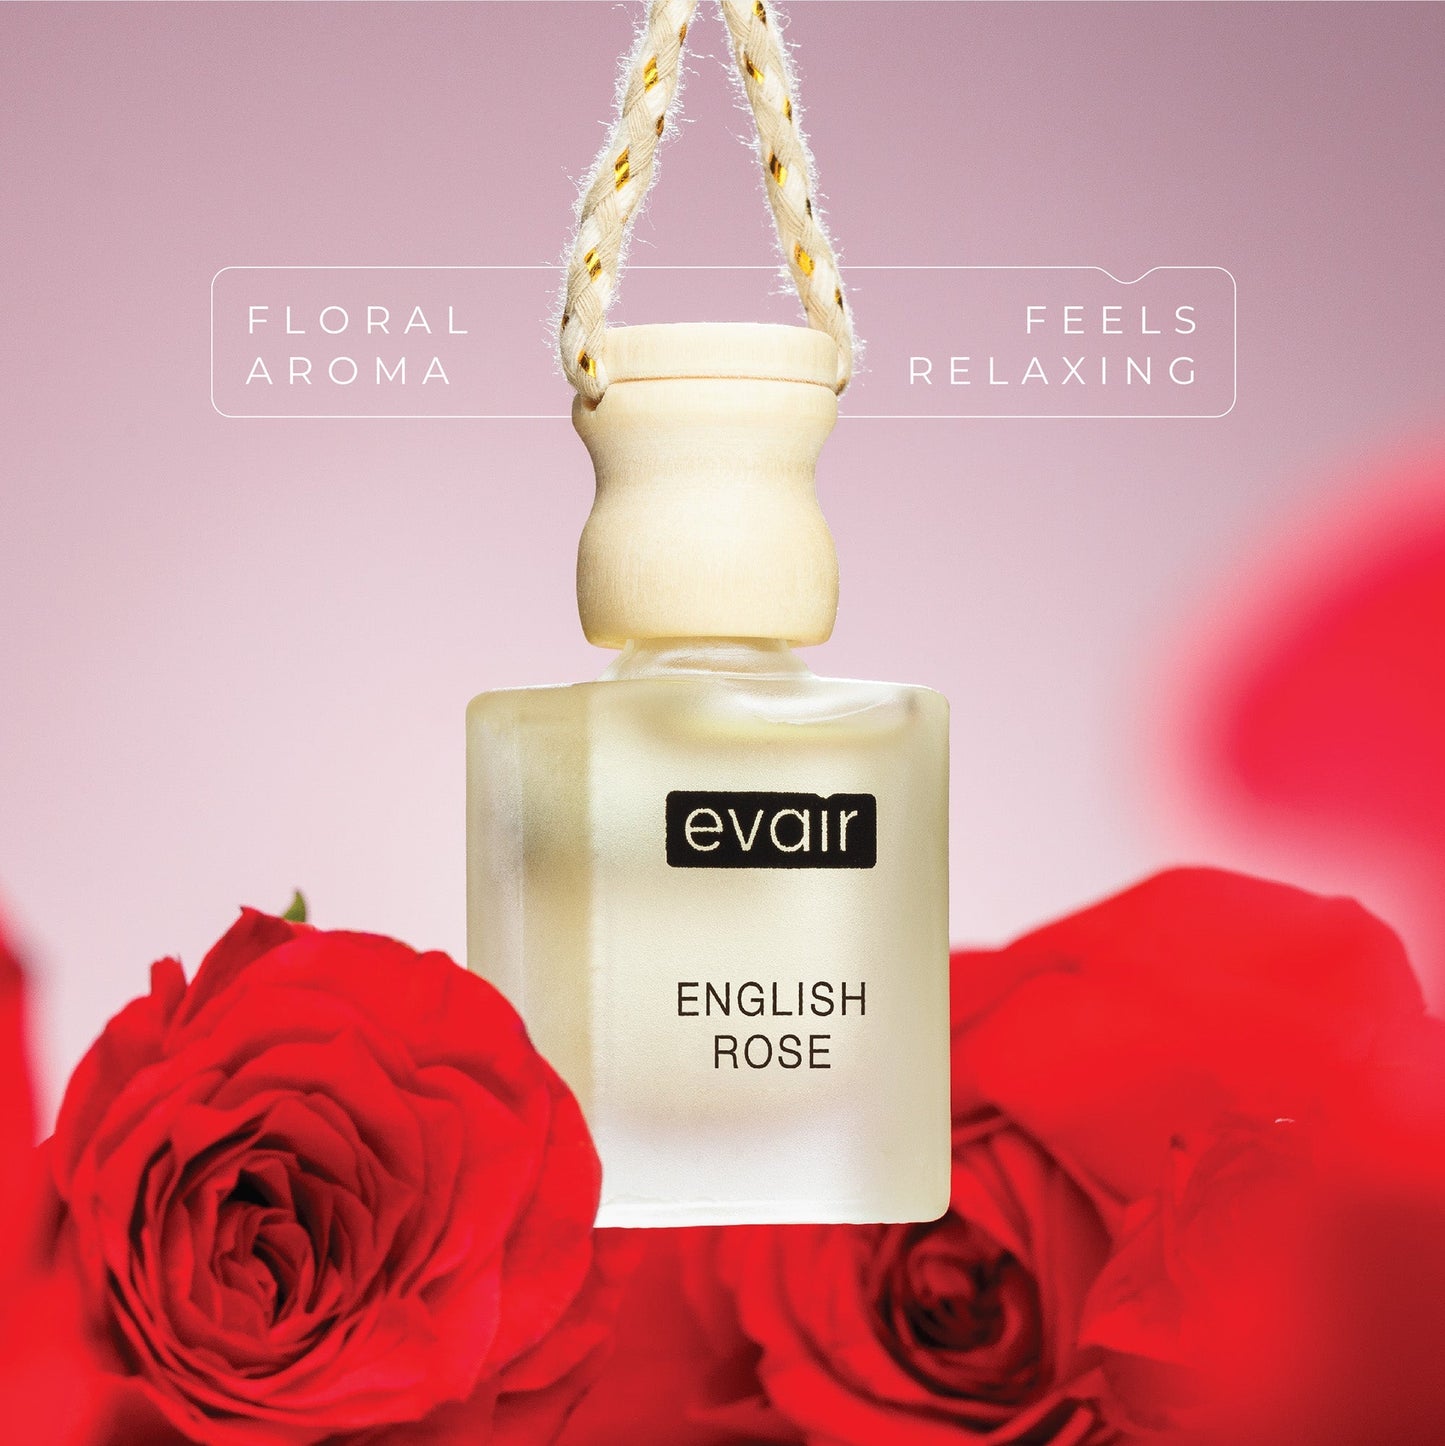 Evair English Rose Perfume Glass Bottle wiith Rose